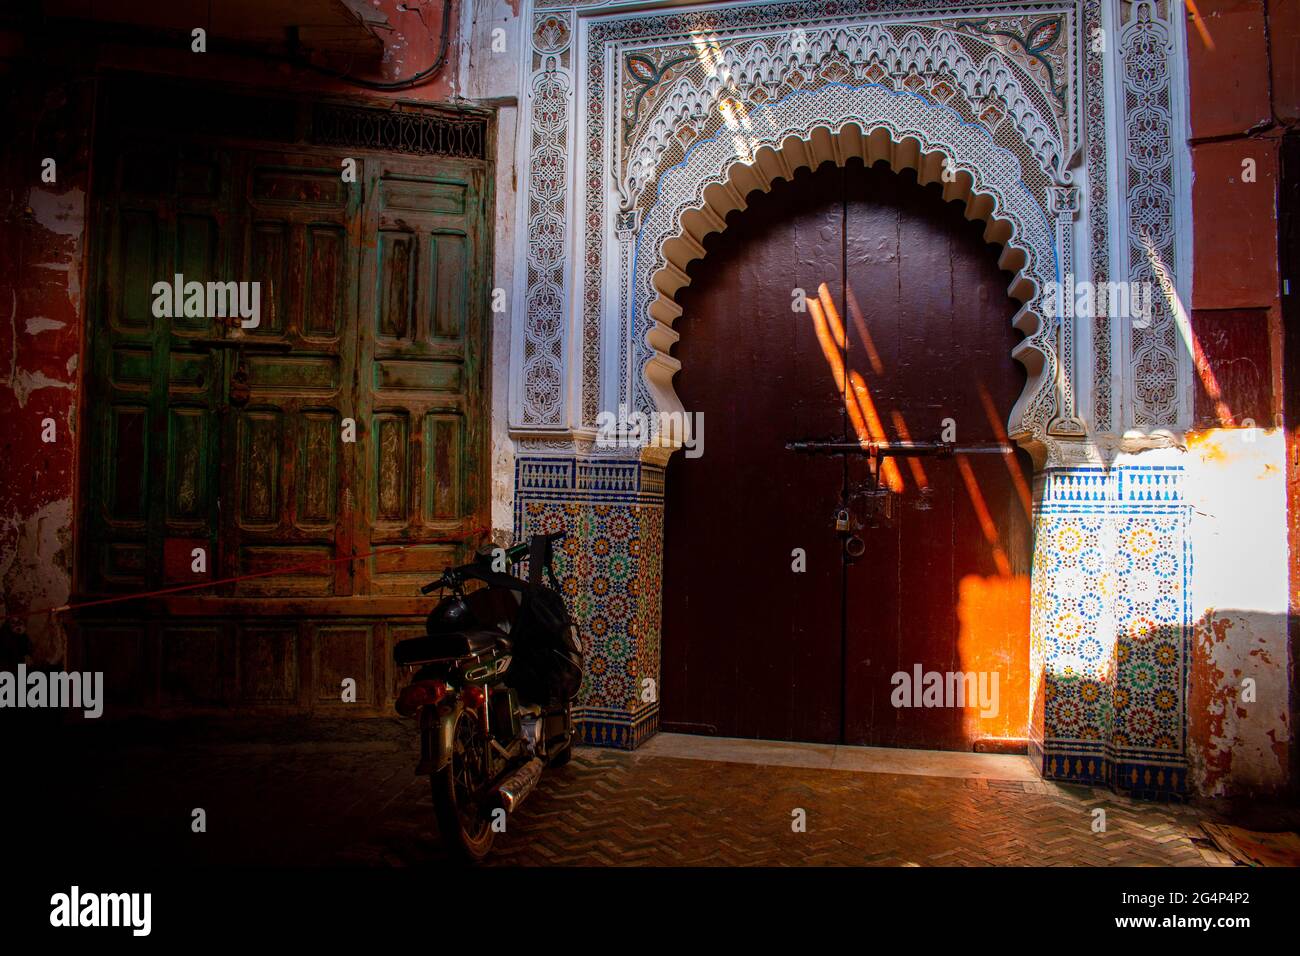 Portes étonnantes dans les rues de Marrakech, Maroc Banque D'Images